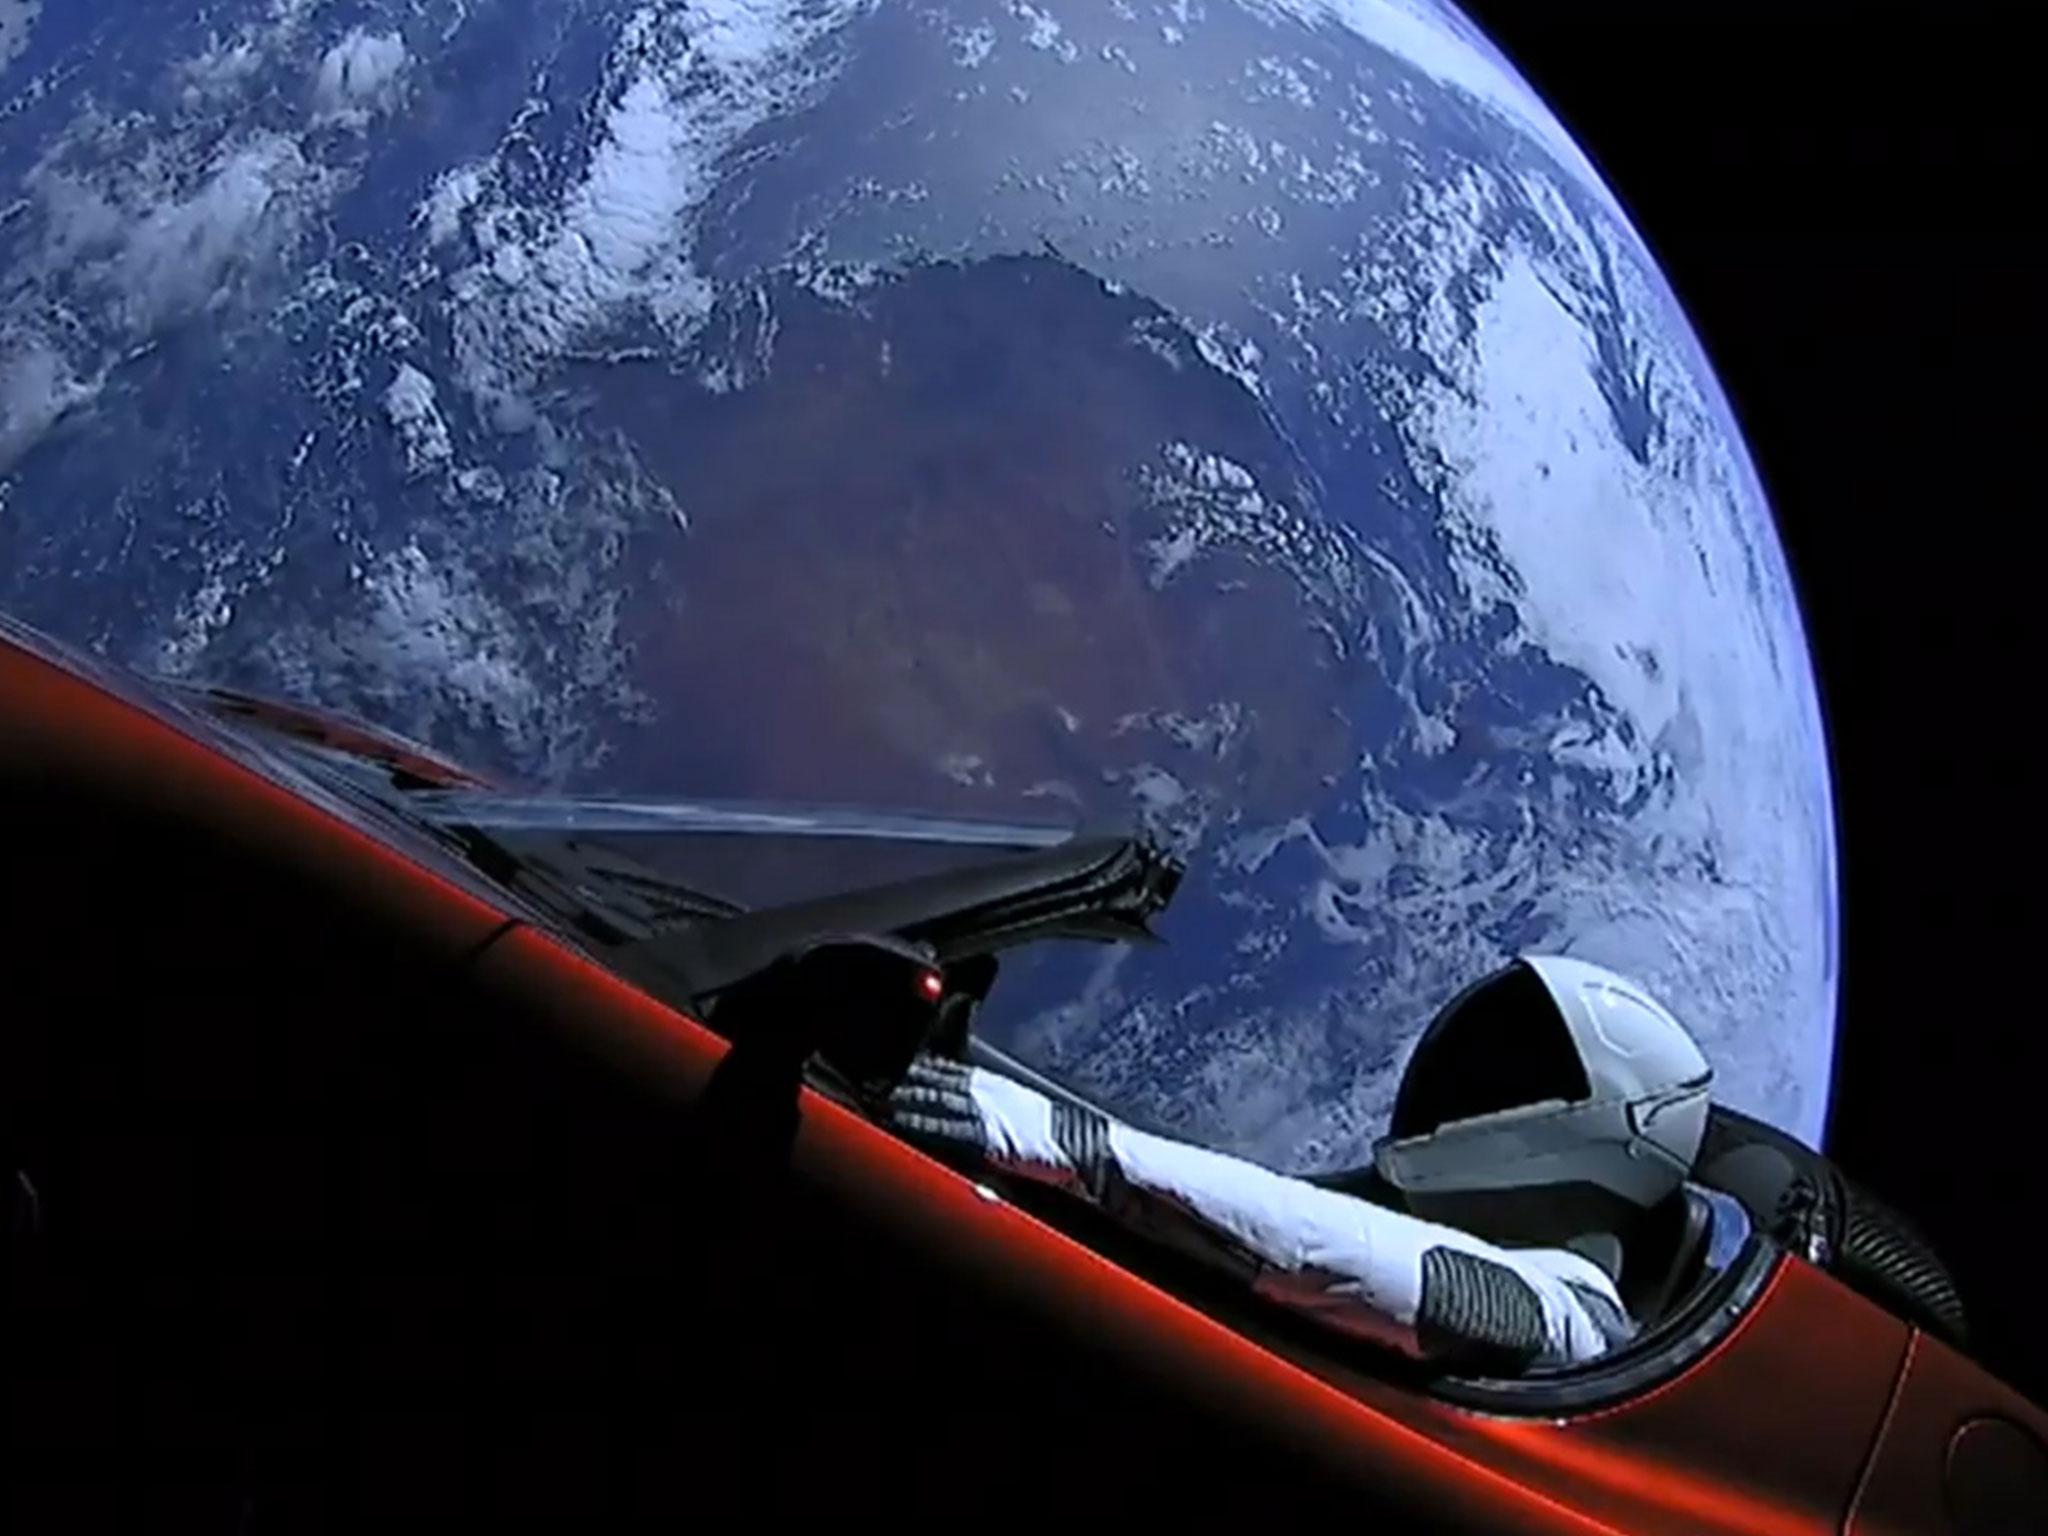 Starman waiting in the. Элон Маск Тесла в космосе. Tesla Roadster SPACEX. Тесла родстер стармэн.